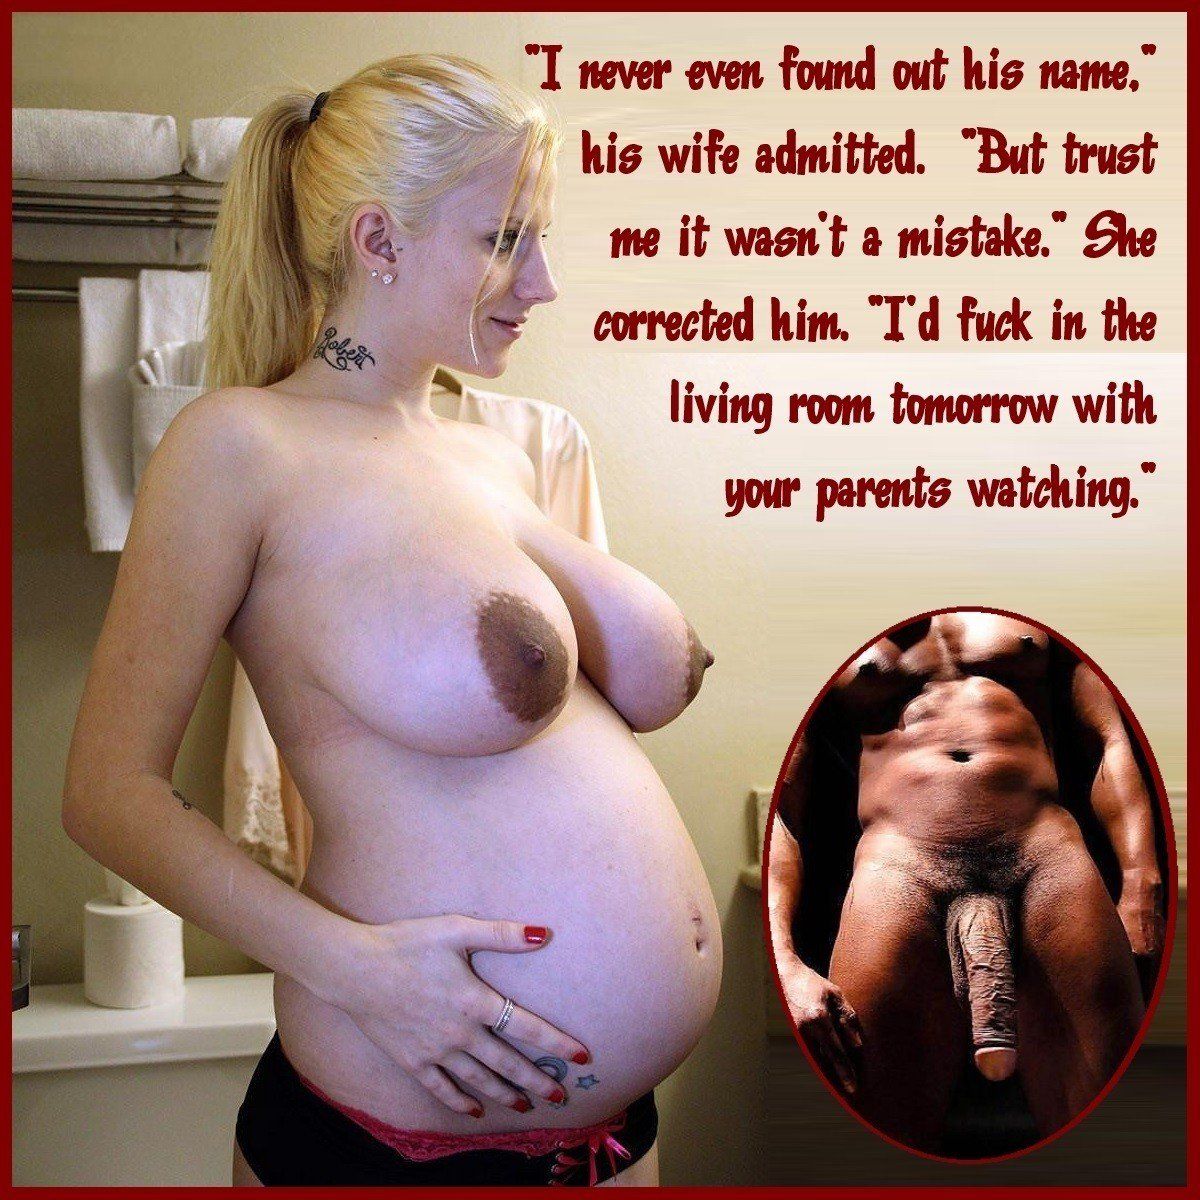 Junior M. recommend best of pictures interratial sex pregnant